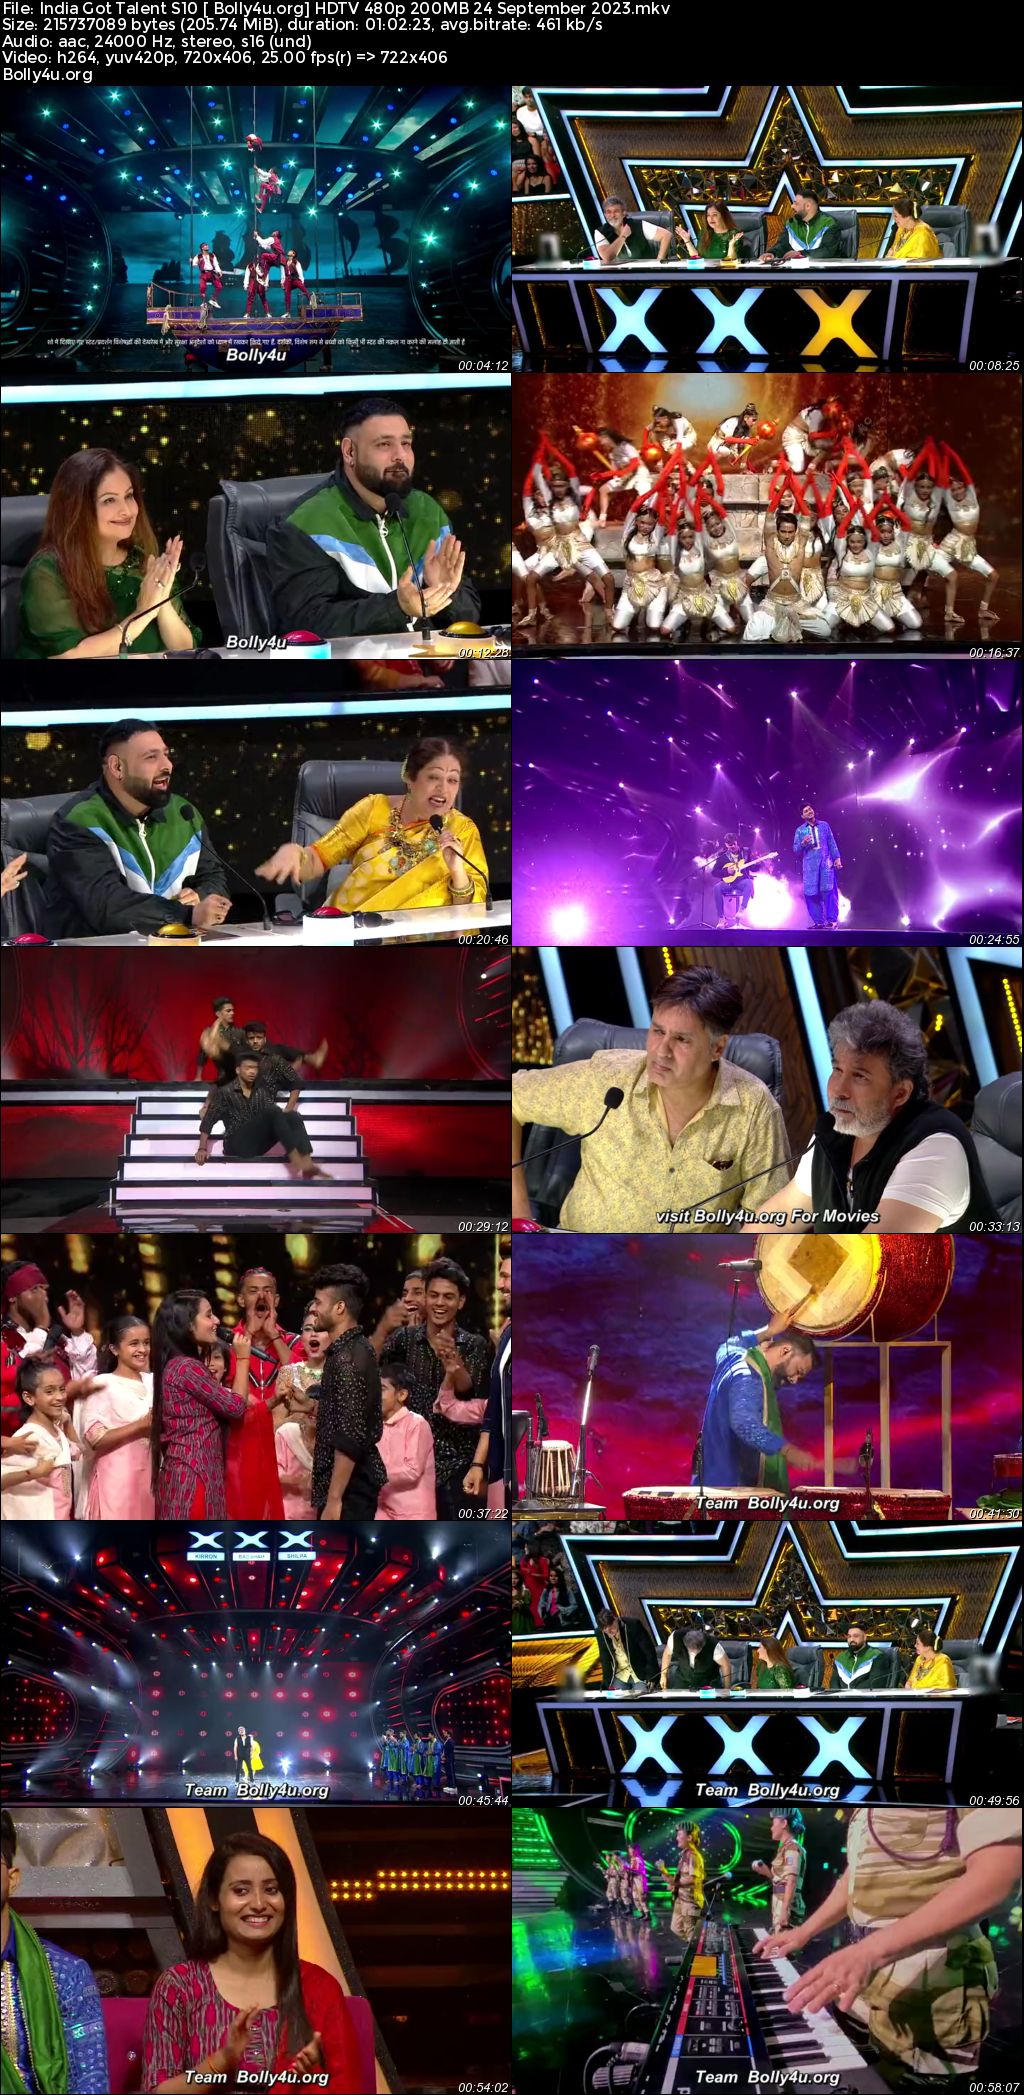 India Got Talent S10 HDTV 480p 200MB 24 September 2023 Download